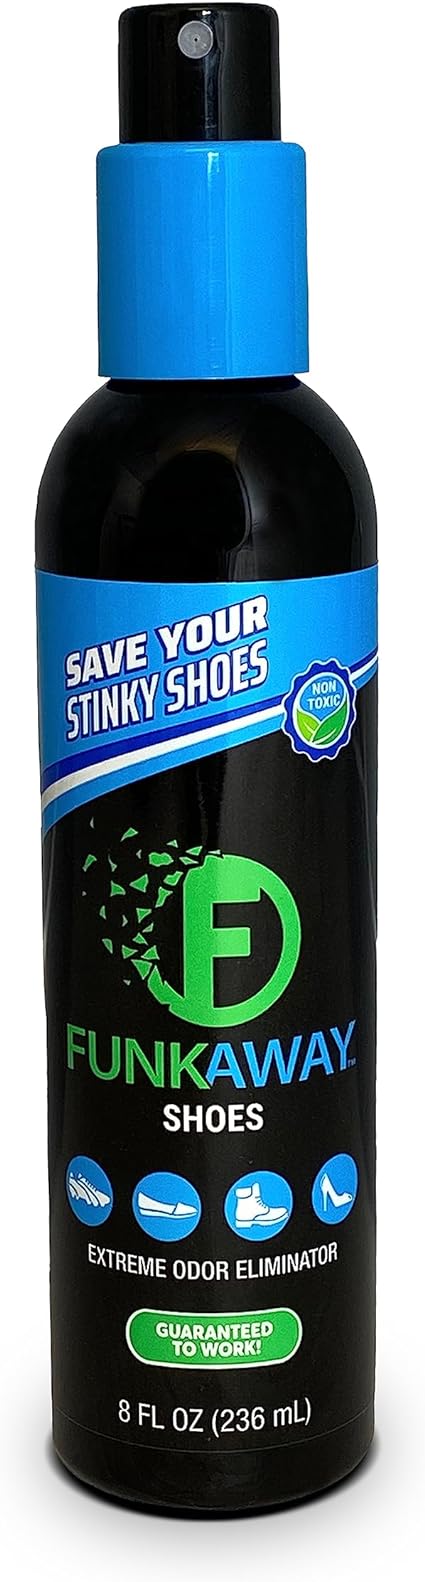 8-Oz FunkAway Odor Eliminating Shoe Spray $1.90 w/ S&S + Free Shipping w/ Prime or on orders $35+